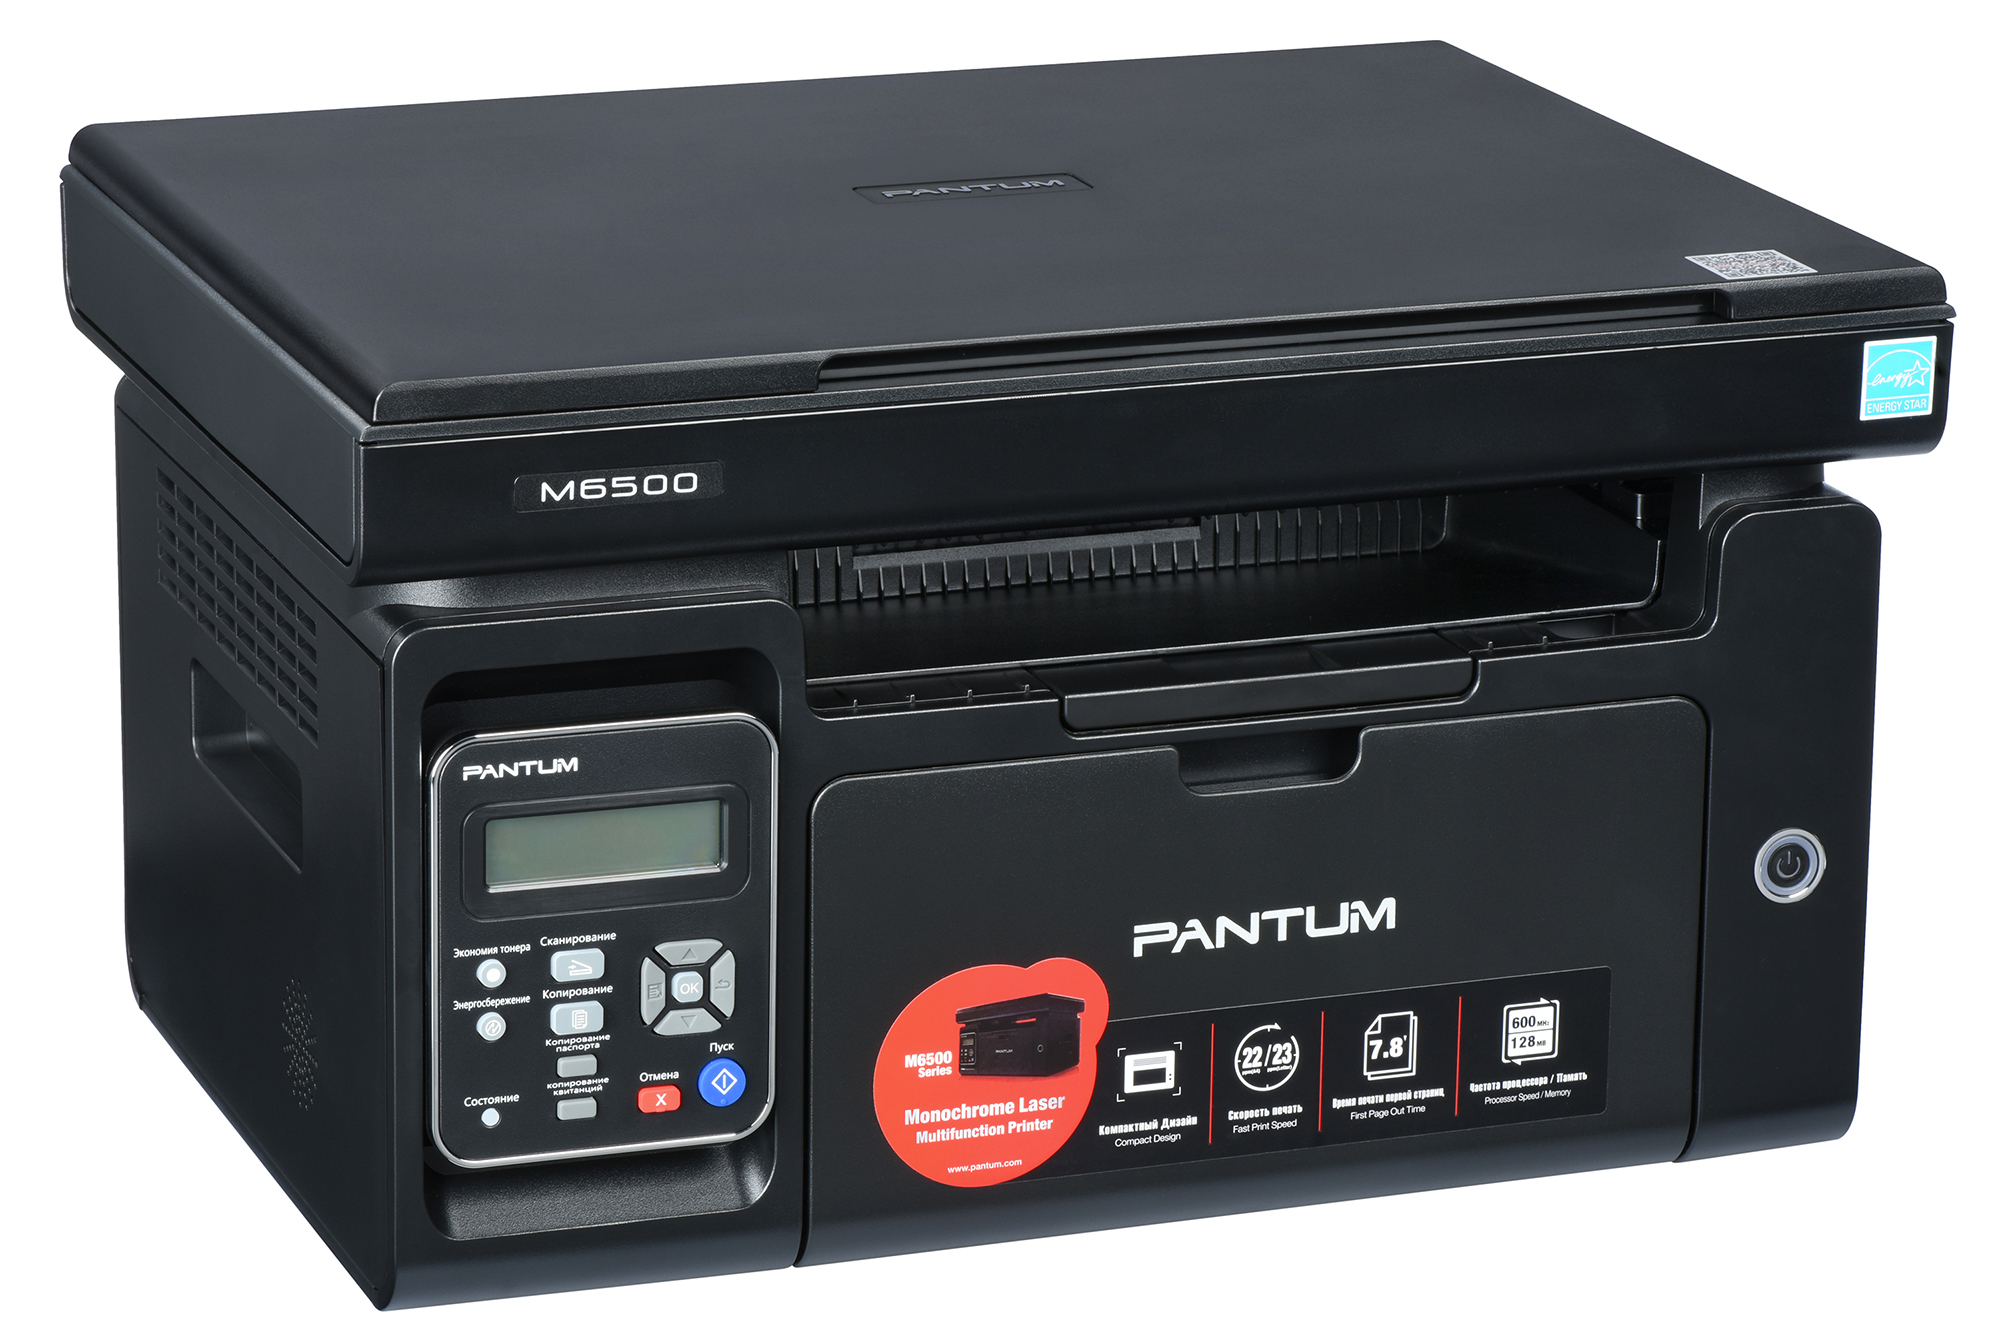 Pantum m6500 series драйвер. МФУ Pantum m6500. Принтер м6500 Pantum. МФУ лазерный Pantum m6500, a4, лазерный, черный. Принтер Пантум 6500.